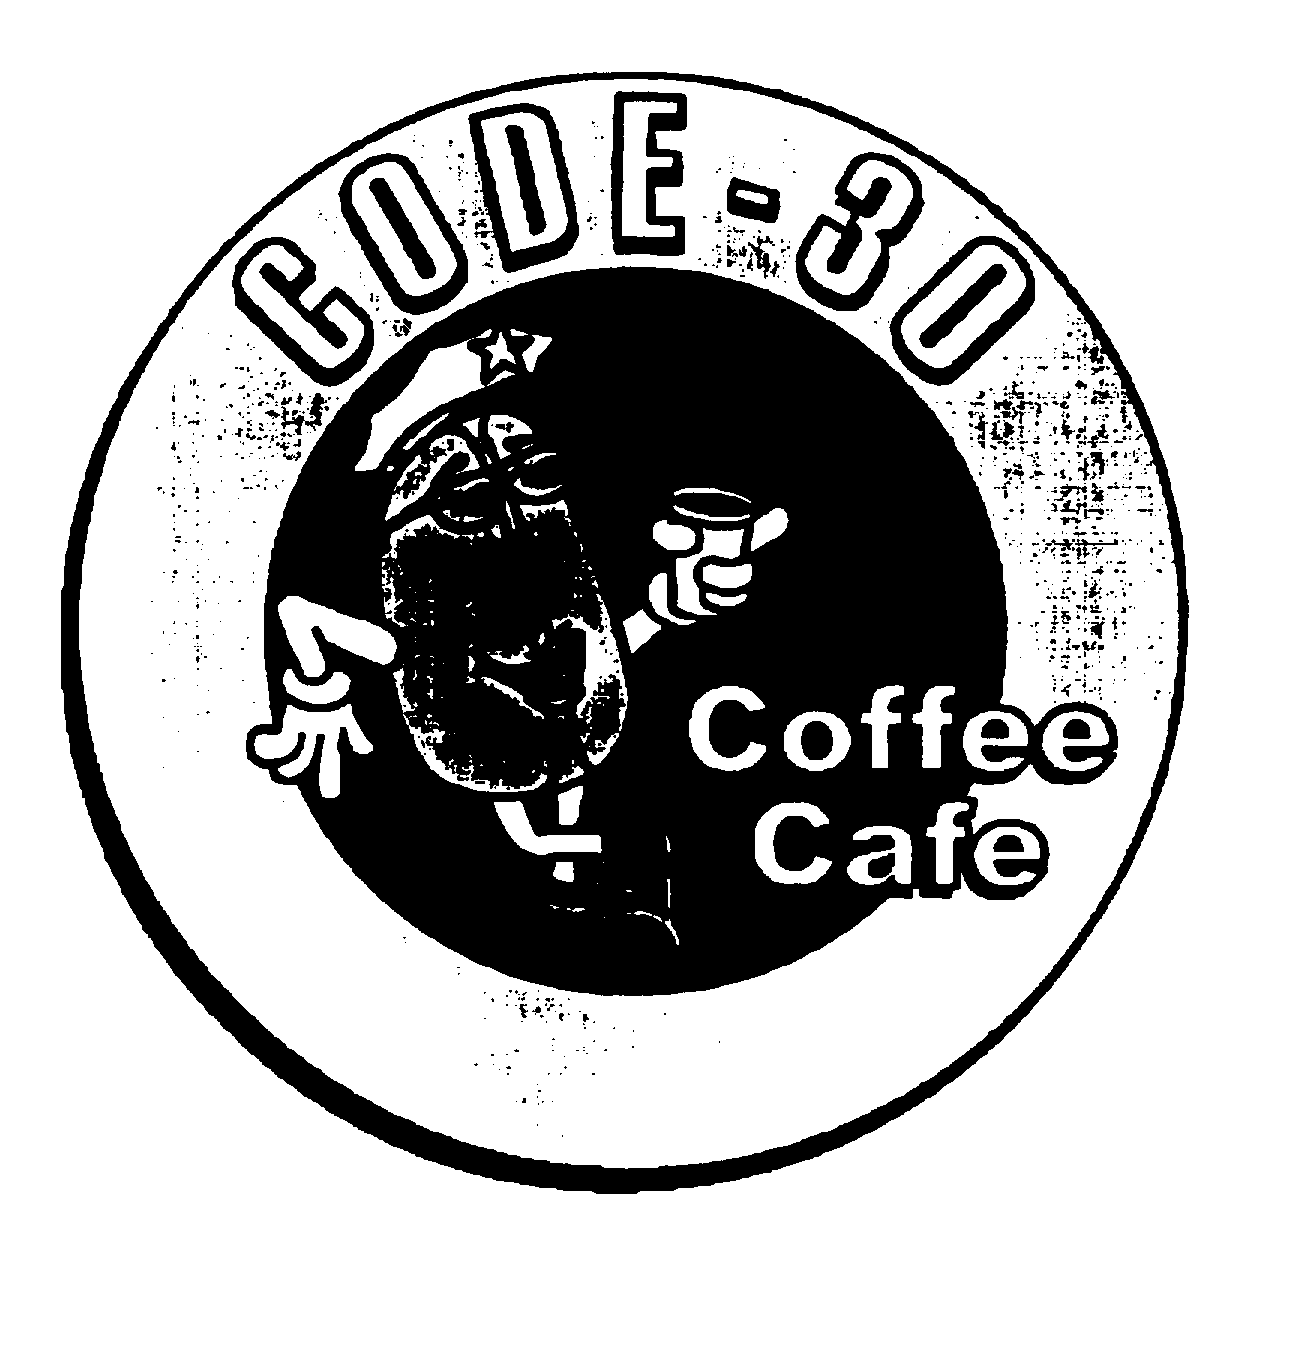  CODE-30 COFFEE CAFE